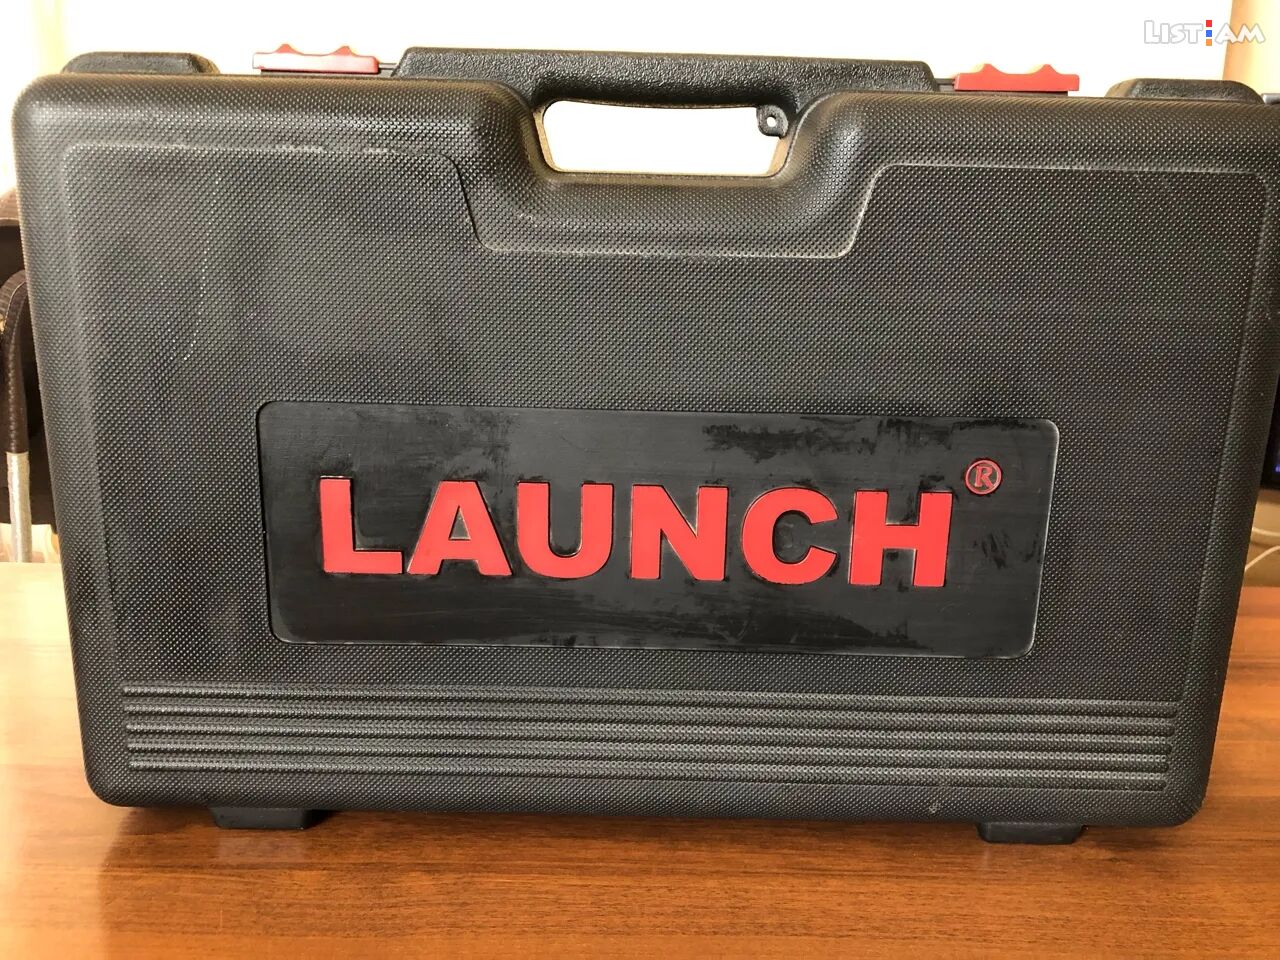 Launch x431